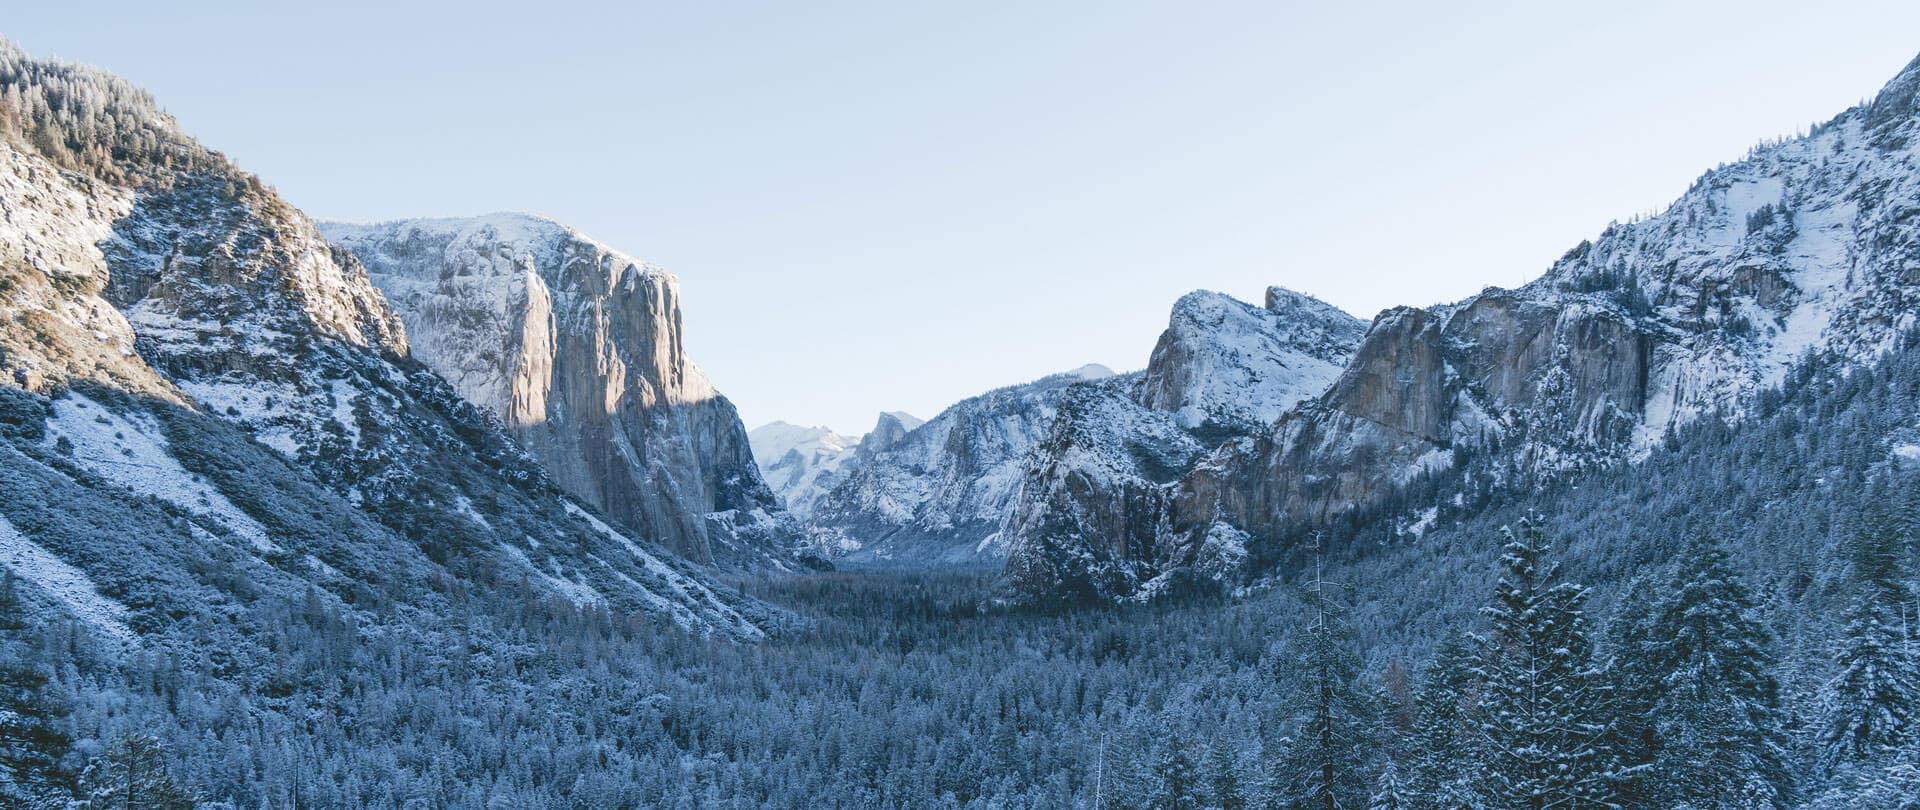 snowshoeing Yosemite Valley